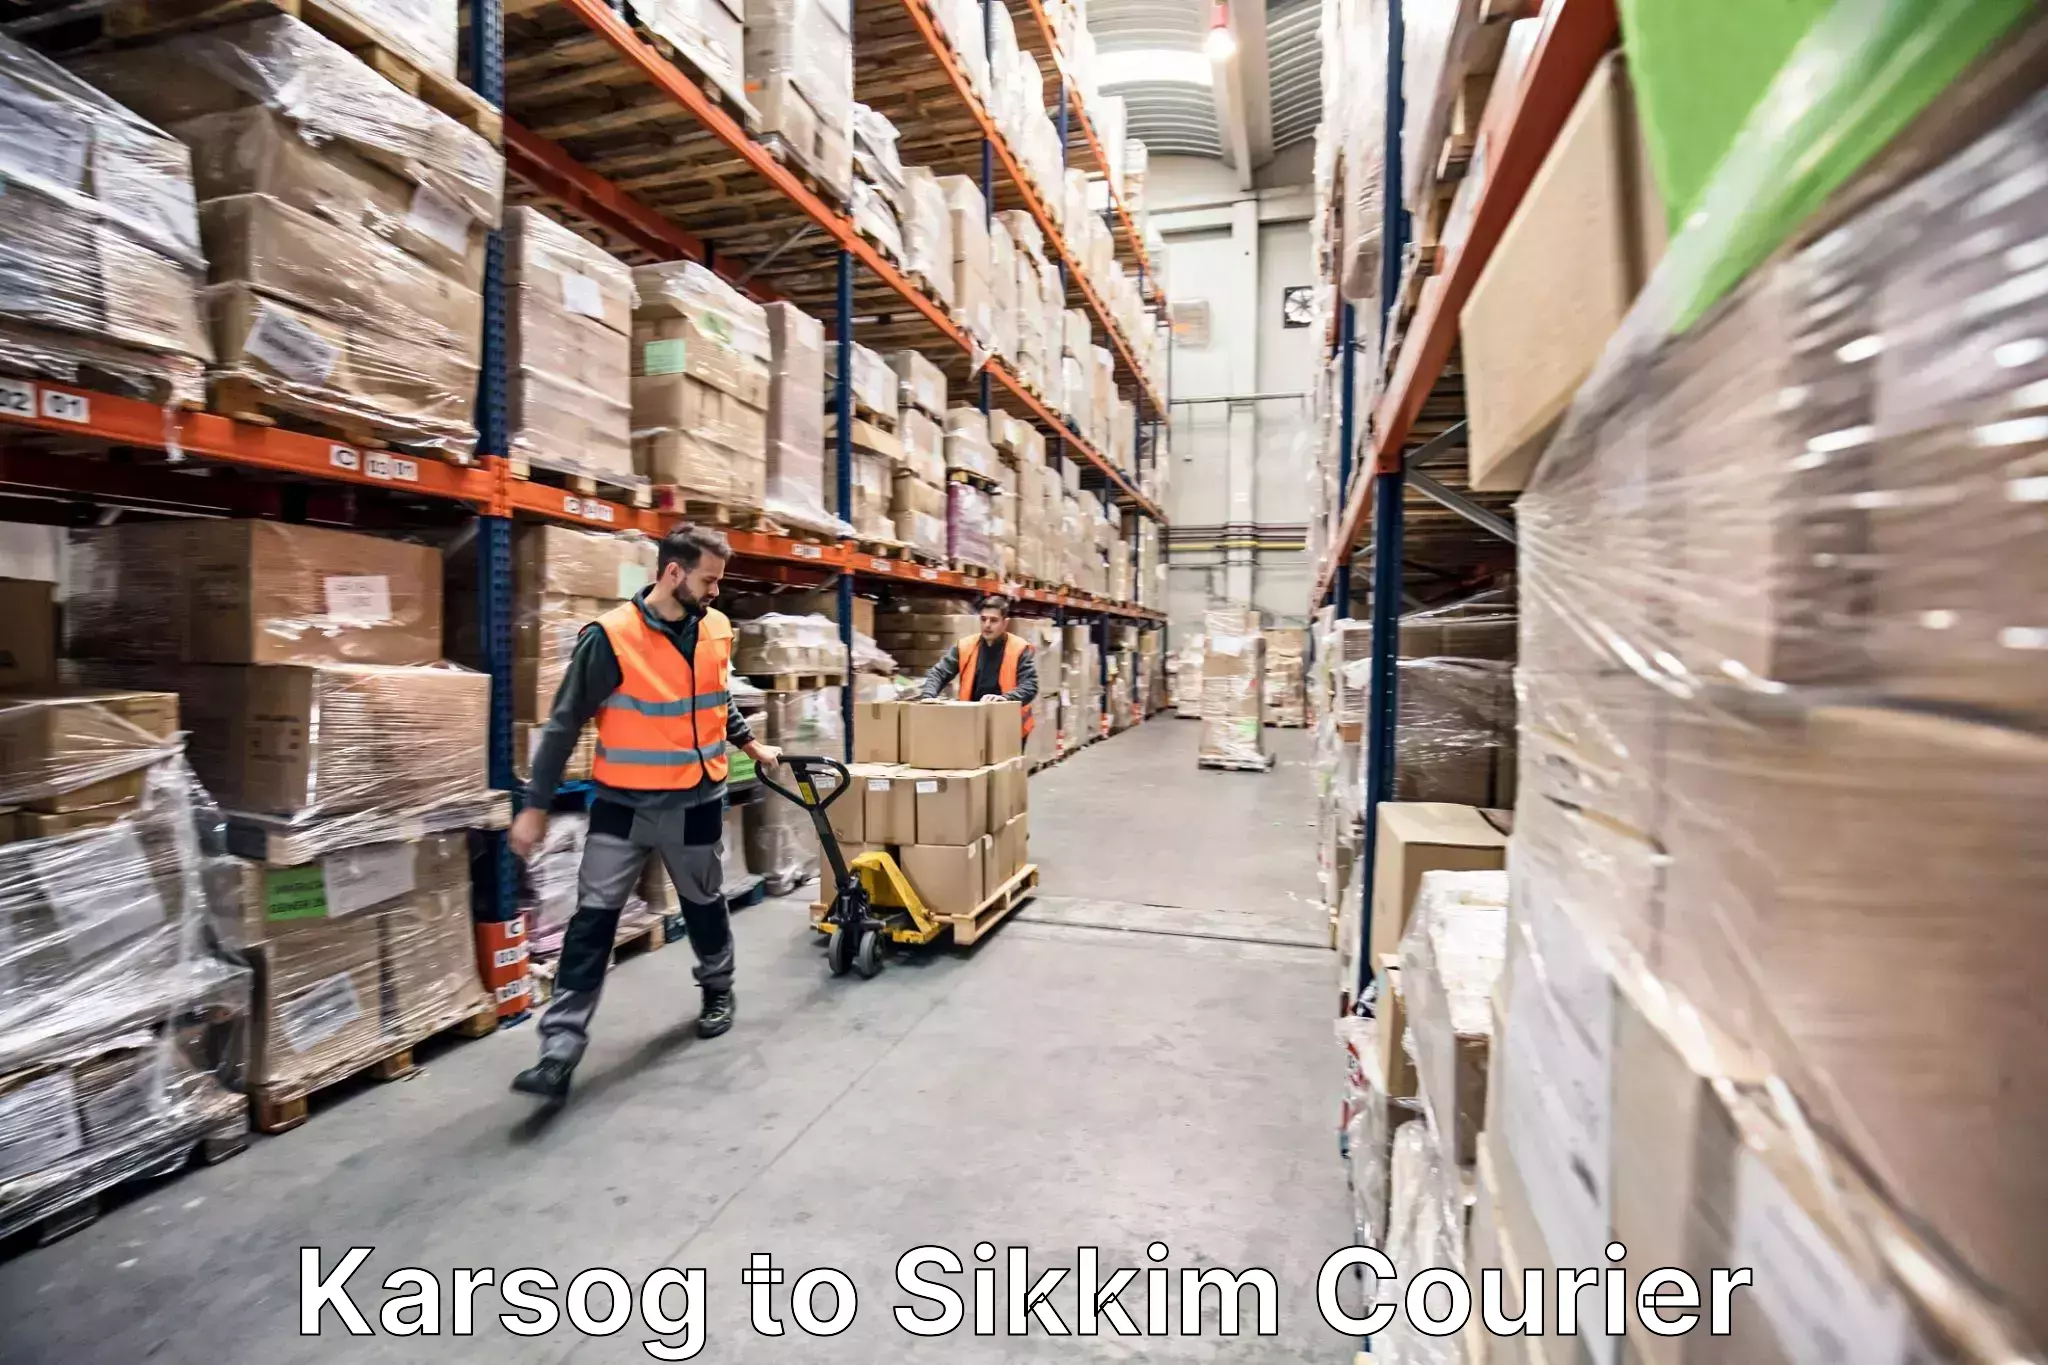 Quality moving company Karsog to Pelling